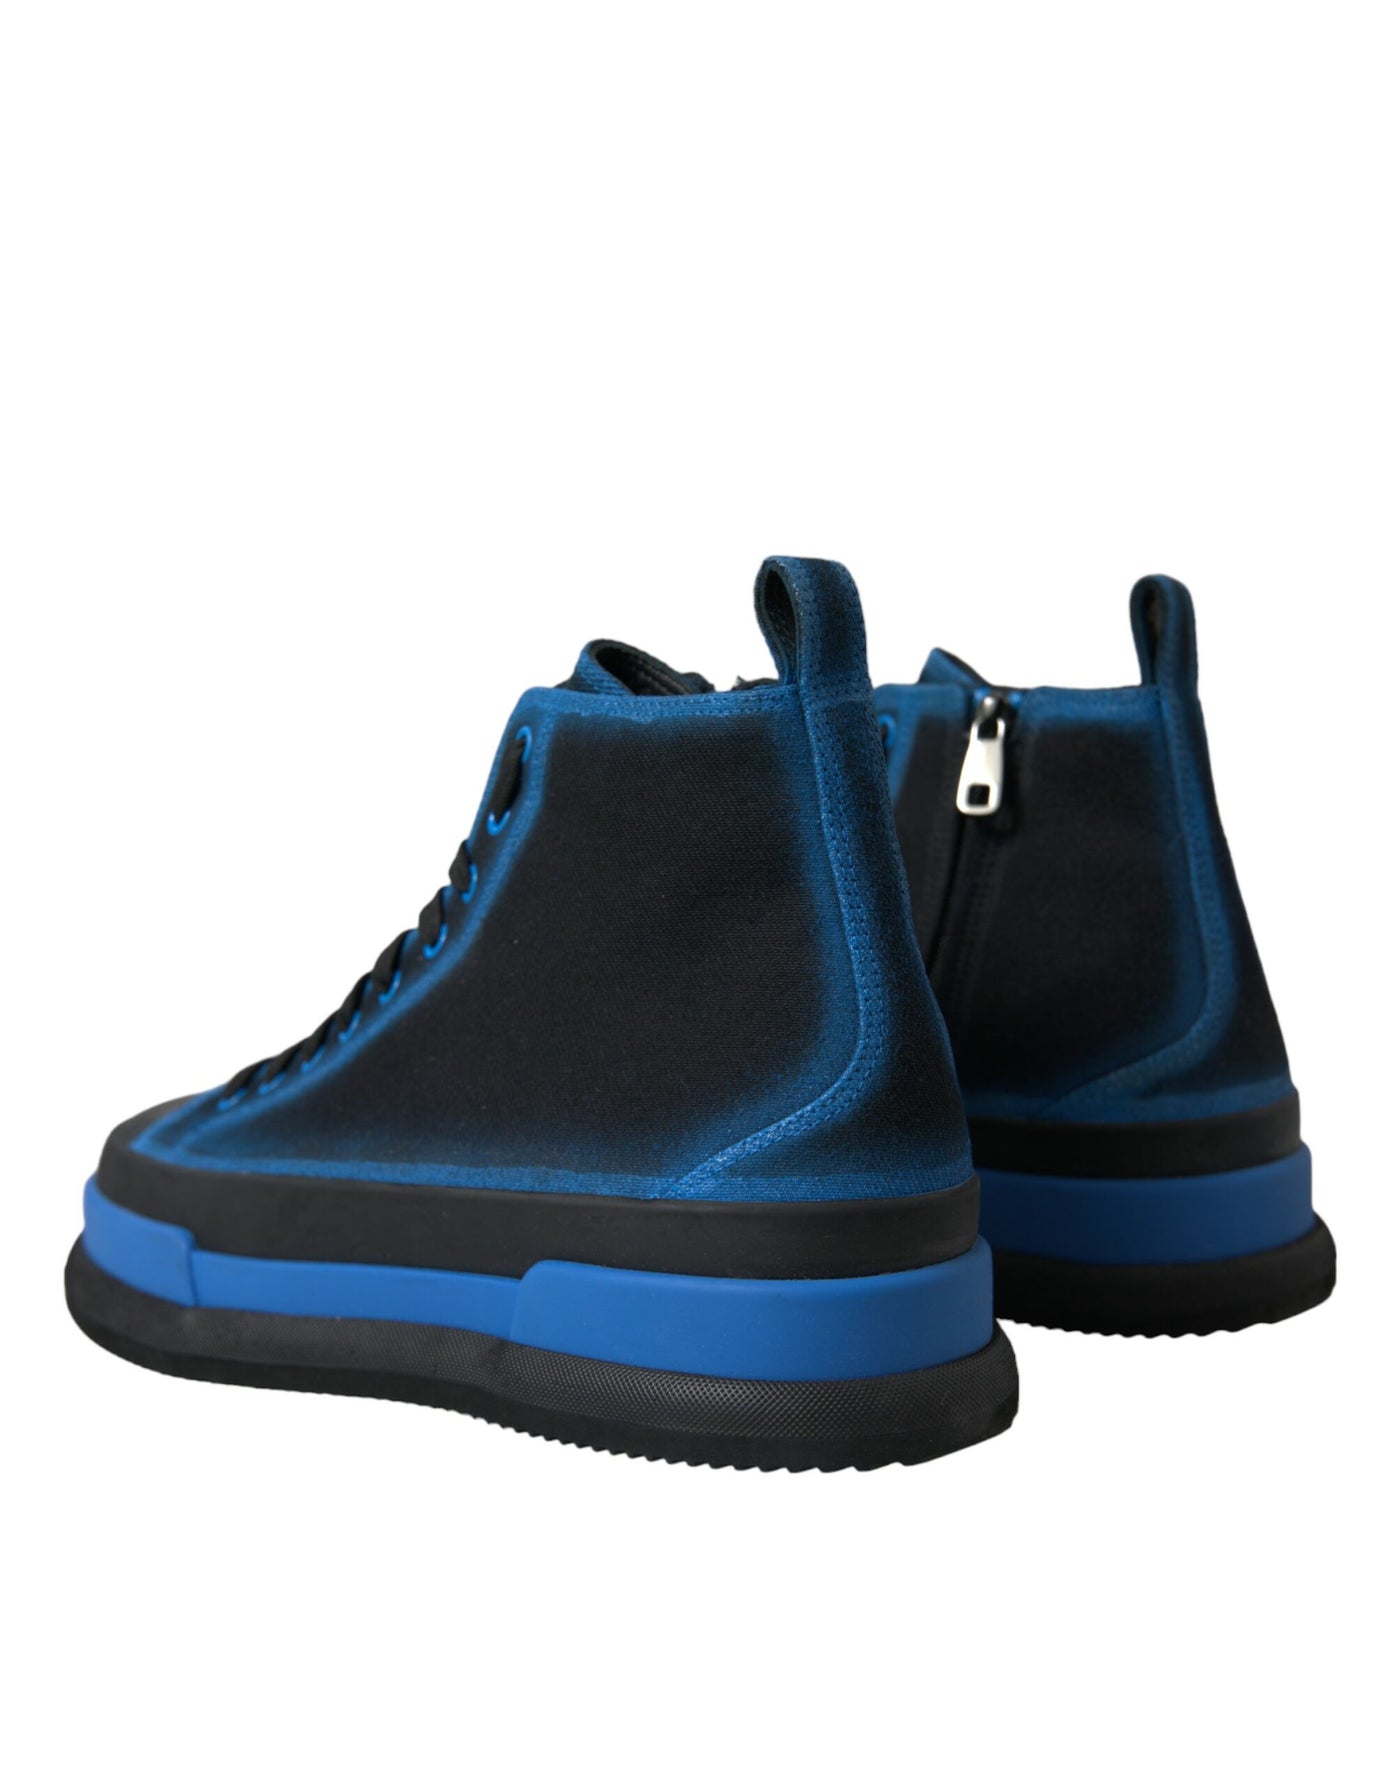 Dolce & Gabbana Black Blue Canvas Cotton High Top Sneakers Shoes